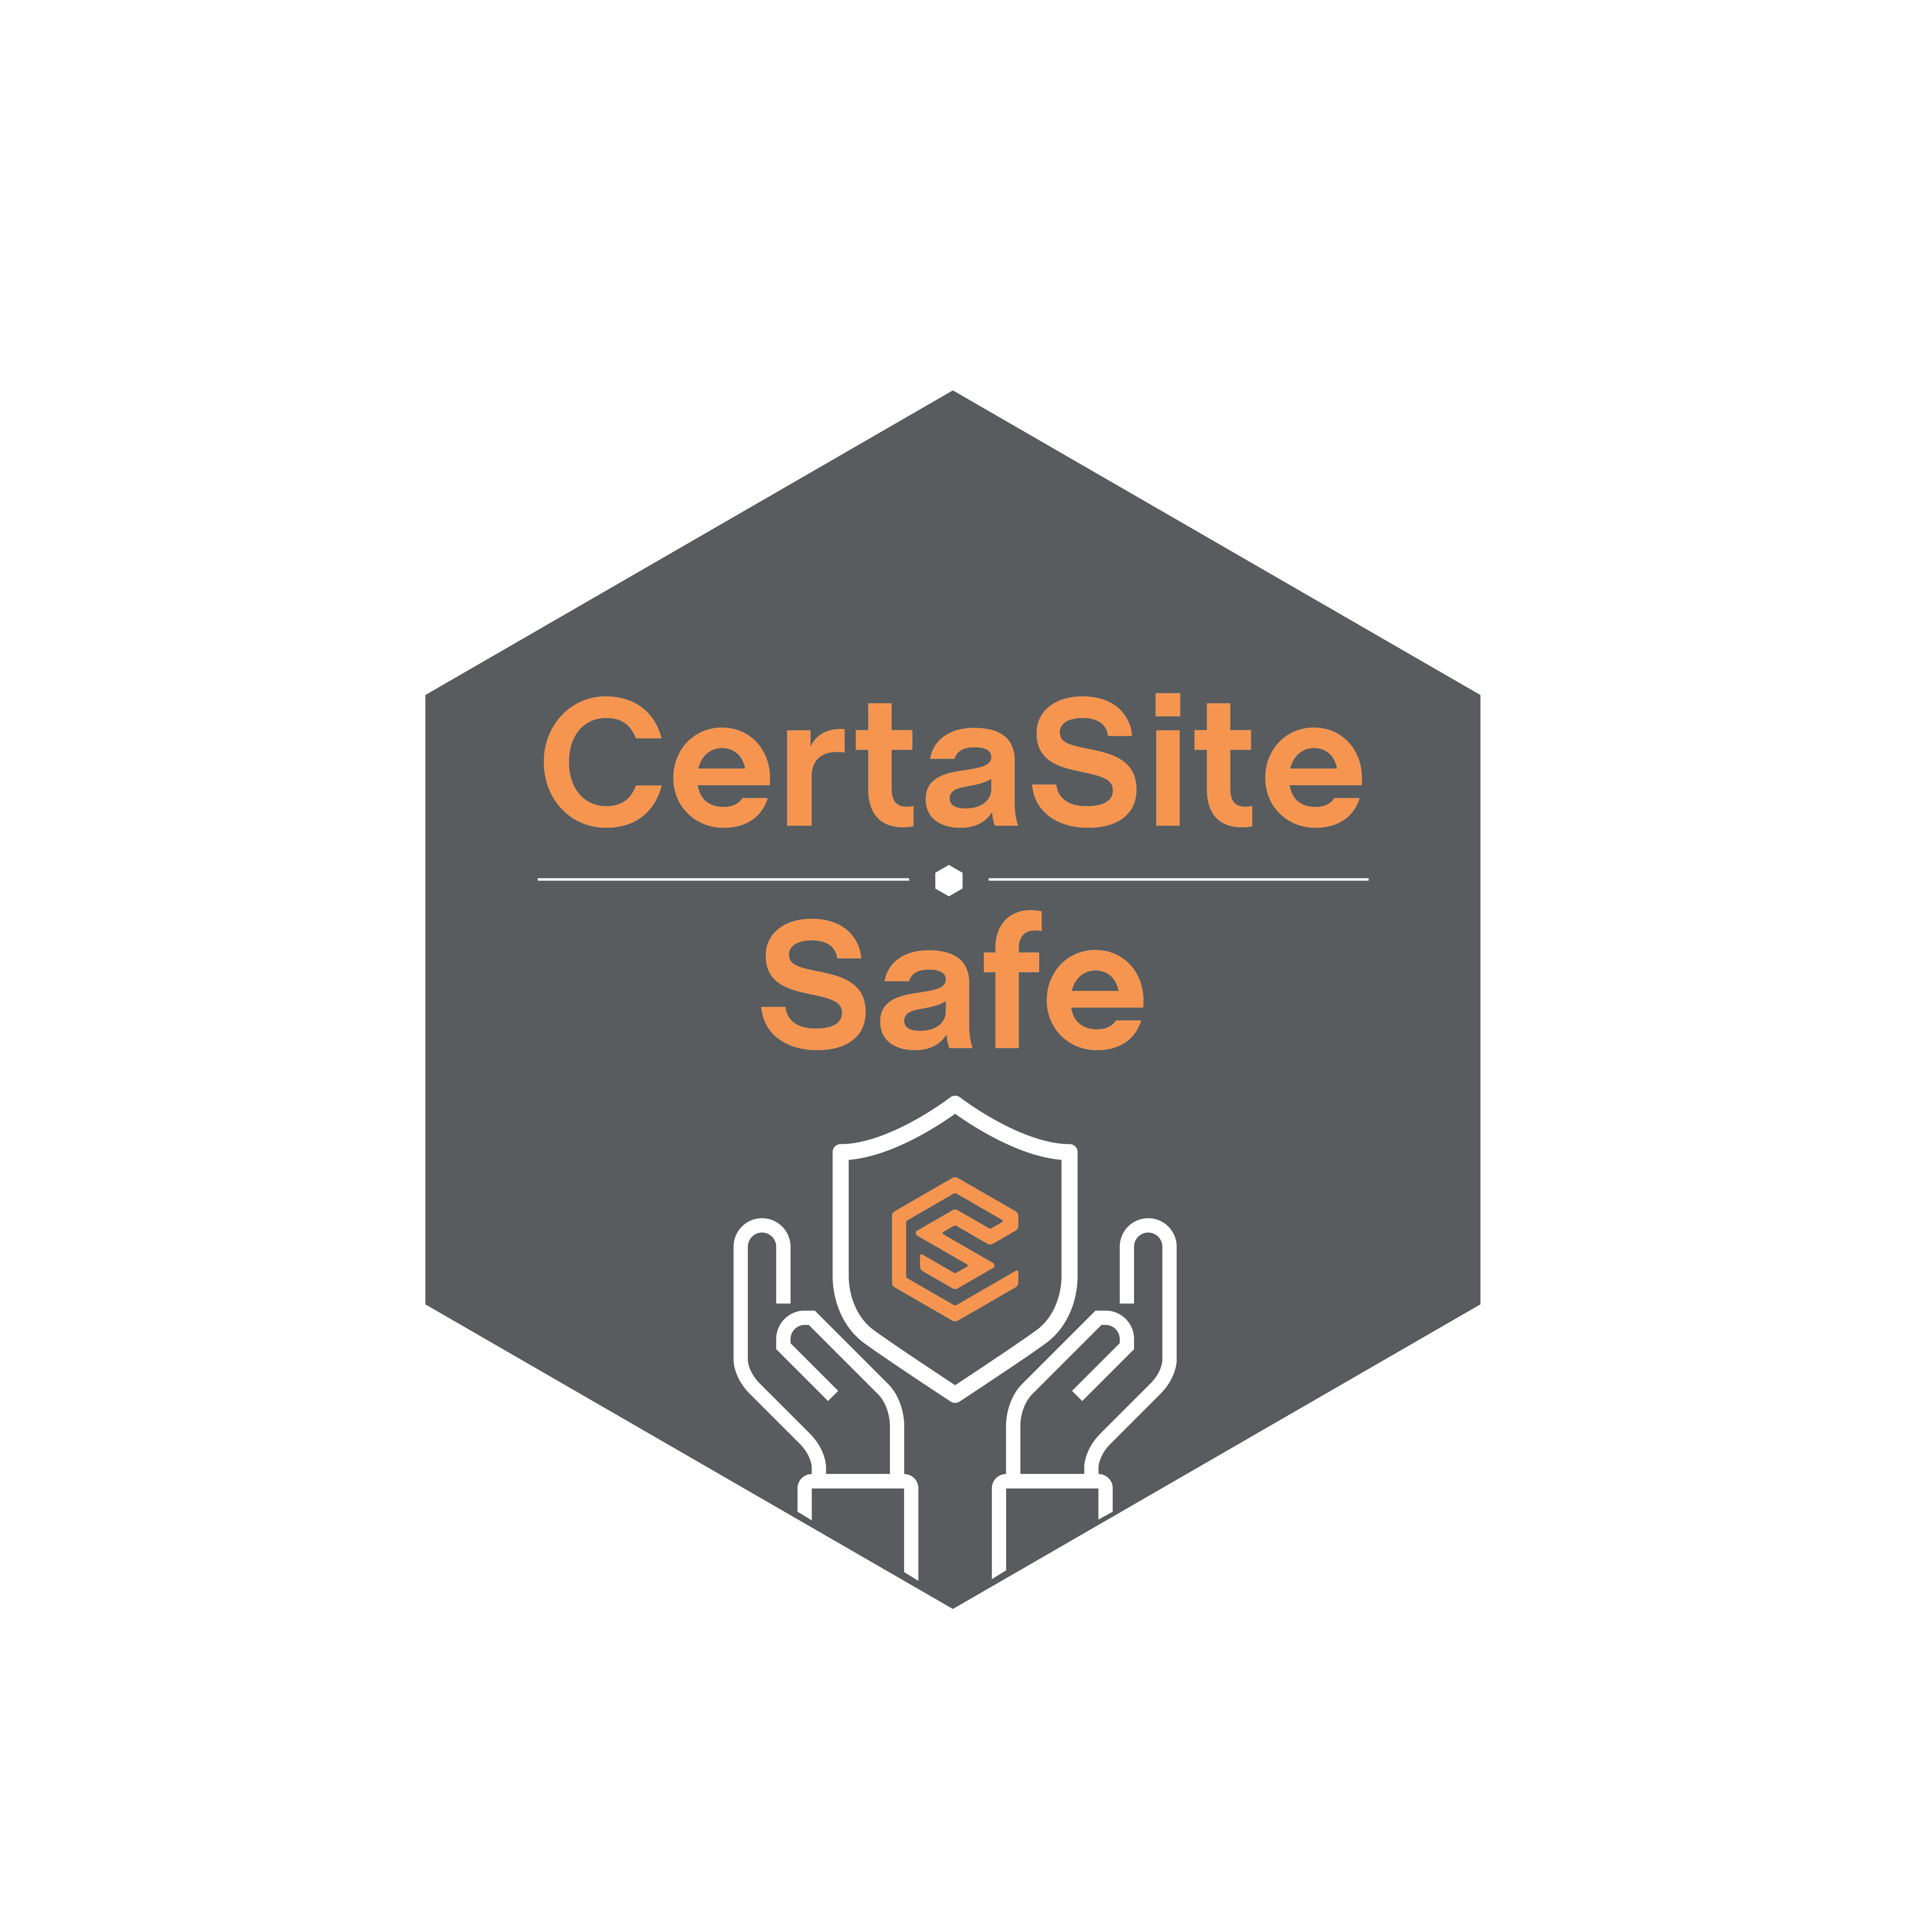 Certasite Safe-PNGs_CertaSite-Safe-icon-GRAY